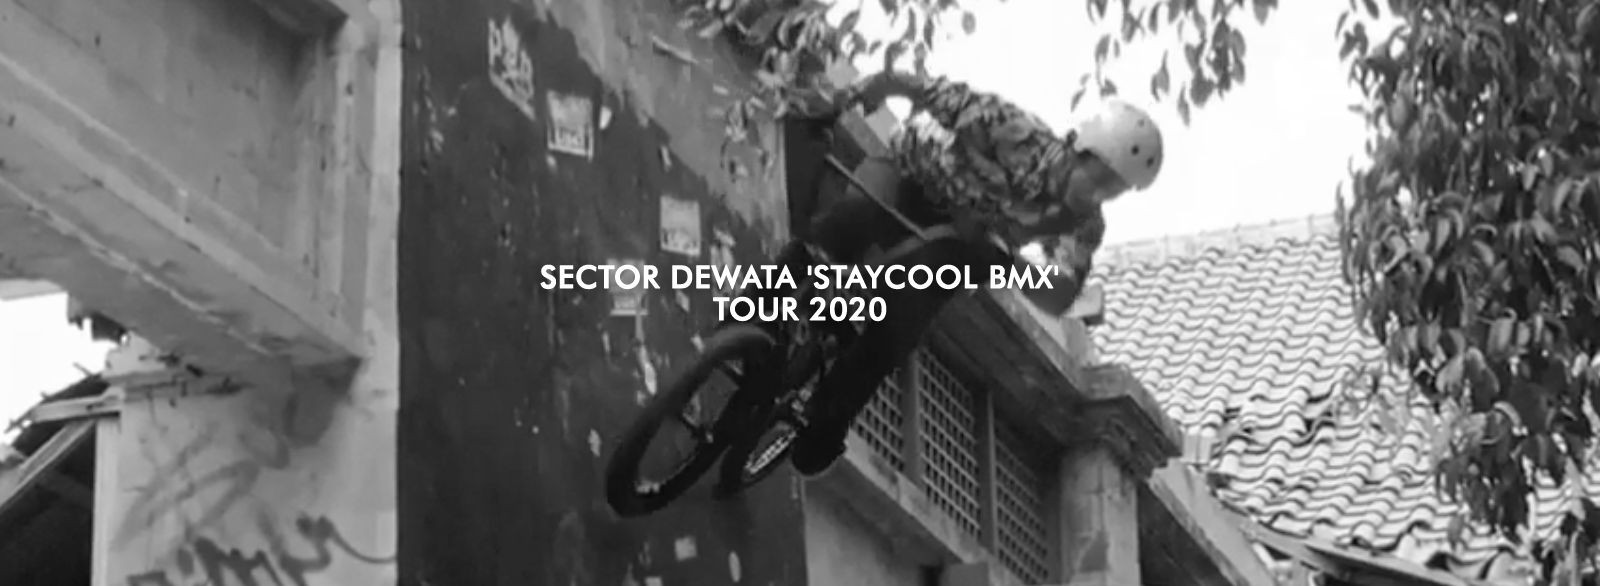 SECTOR DEWATA 'STAYCOOL BMX' TOUR 2020